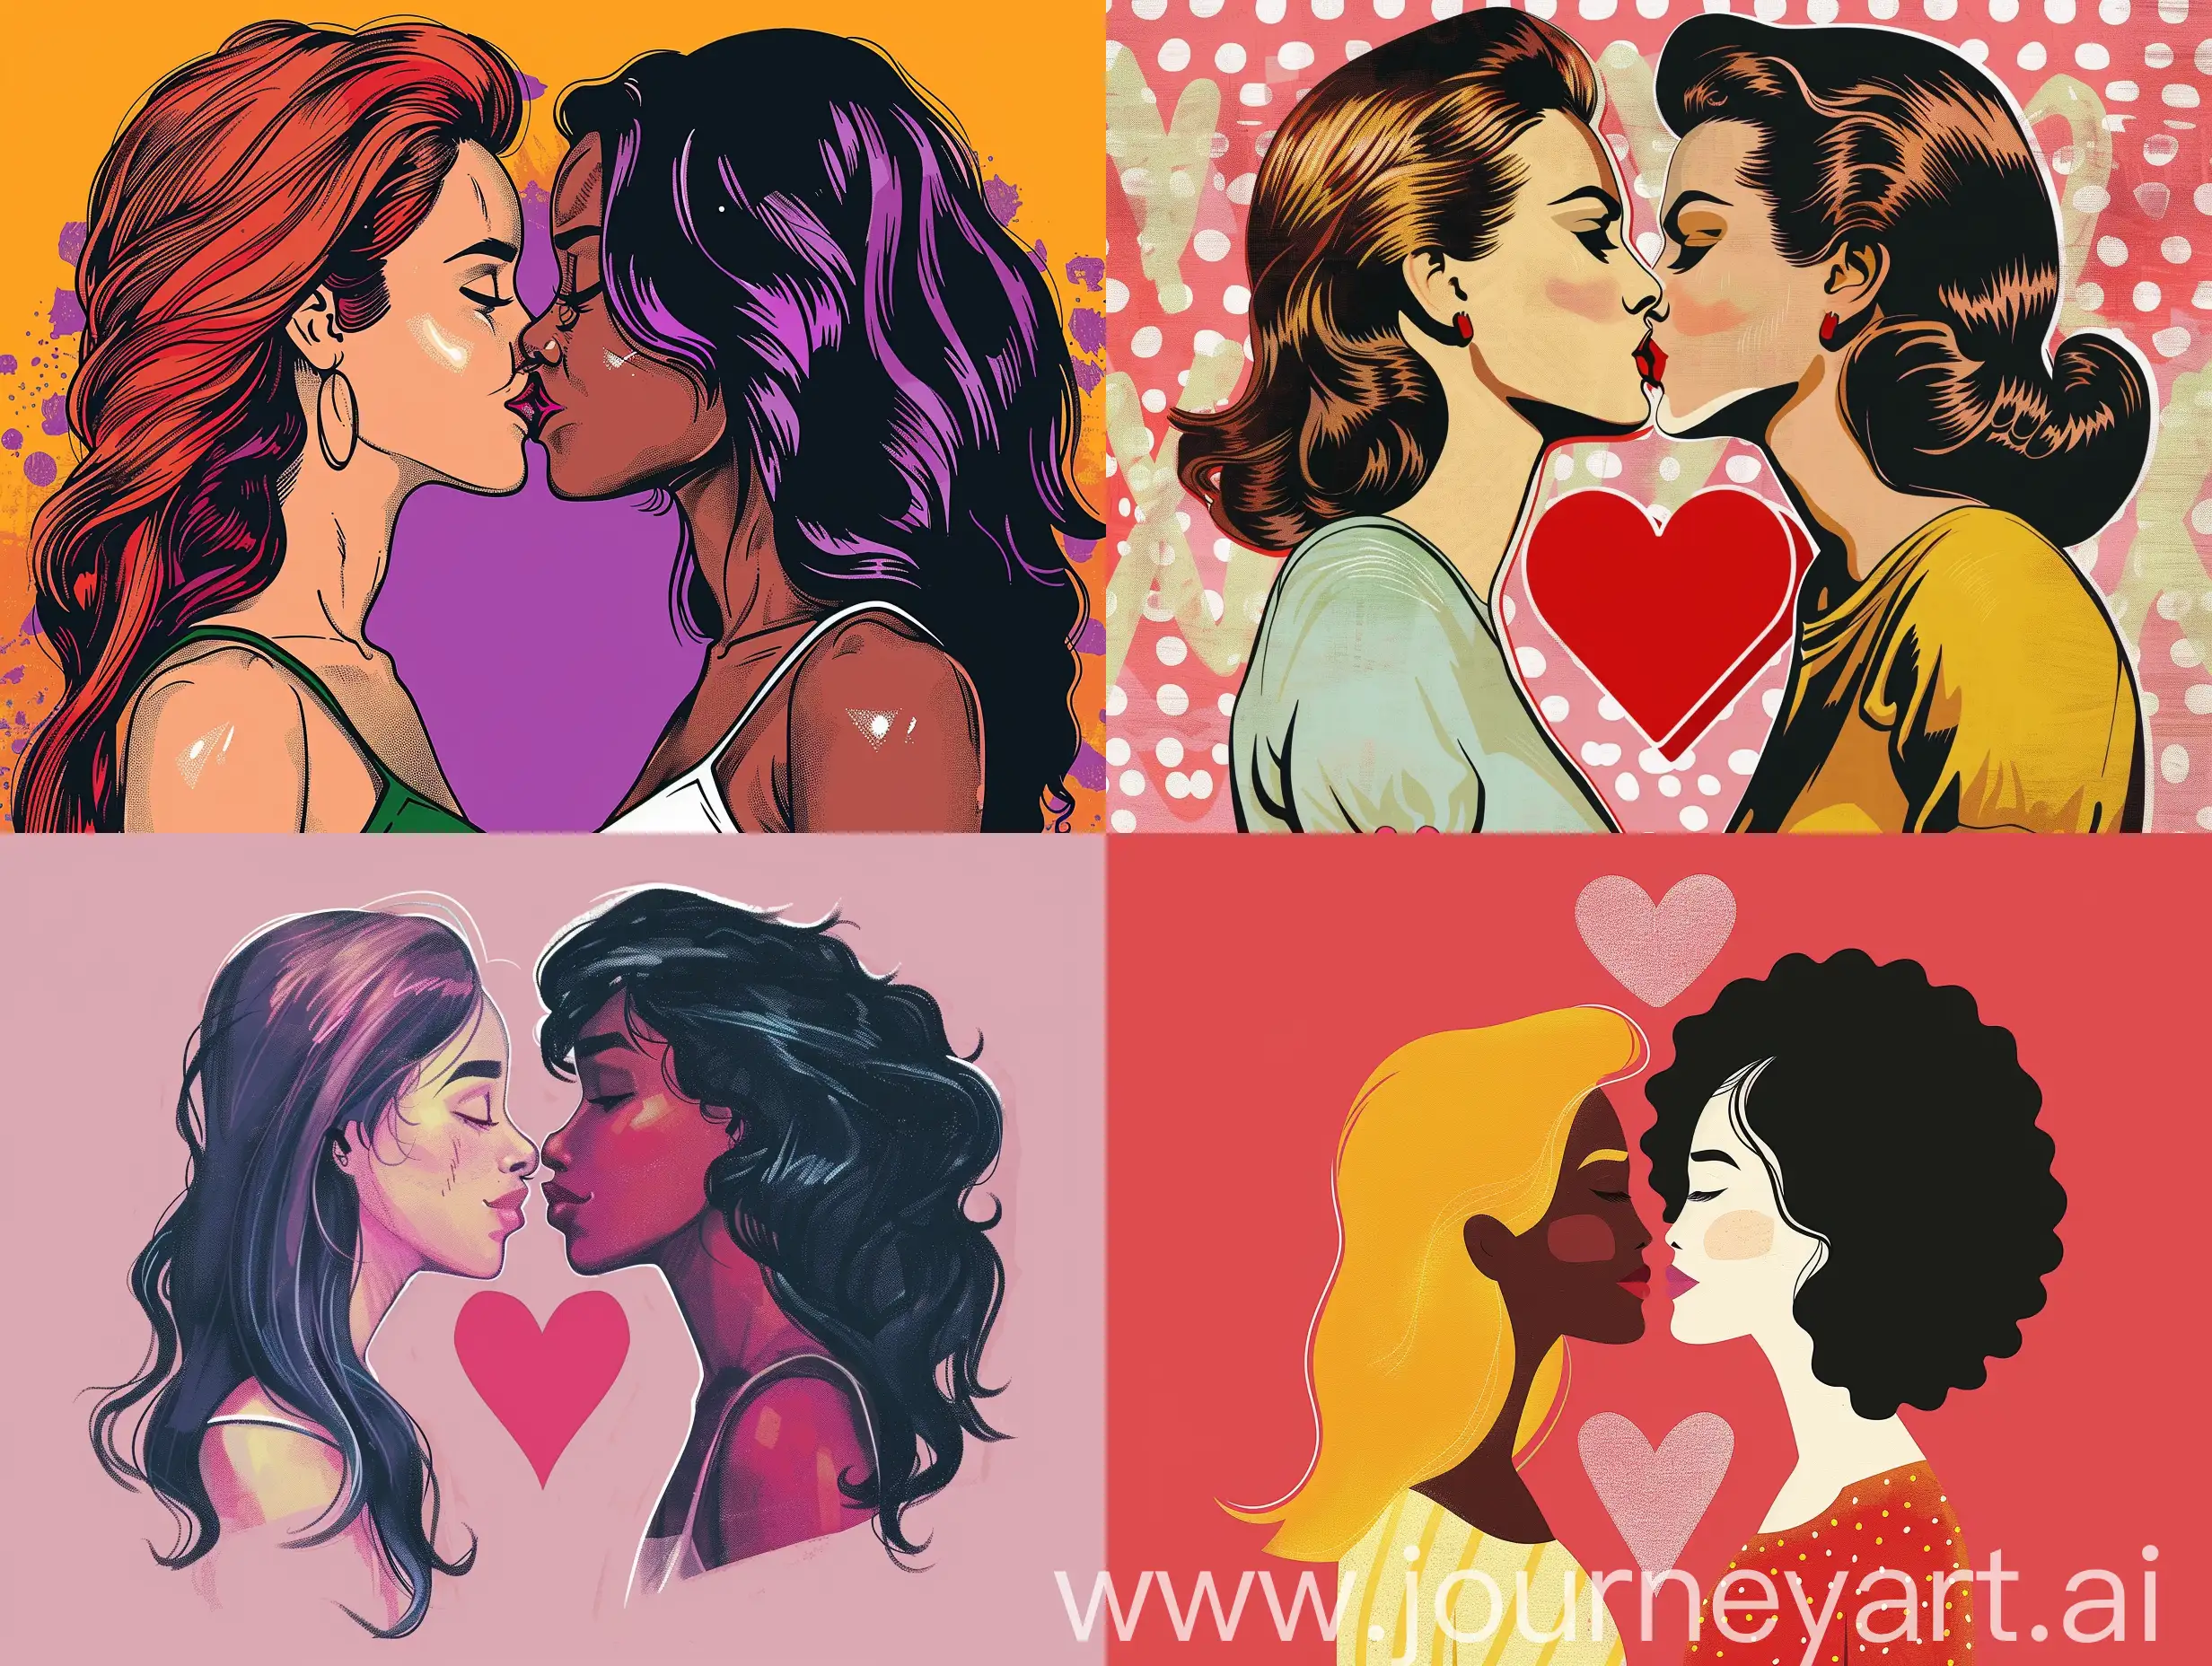 Joyful-Women-Embracing-Friendship-in-Vibrant-Colors